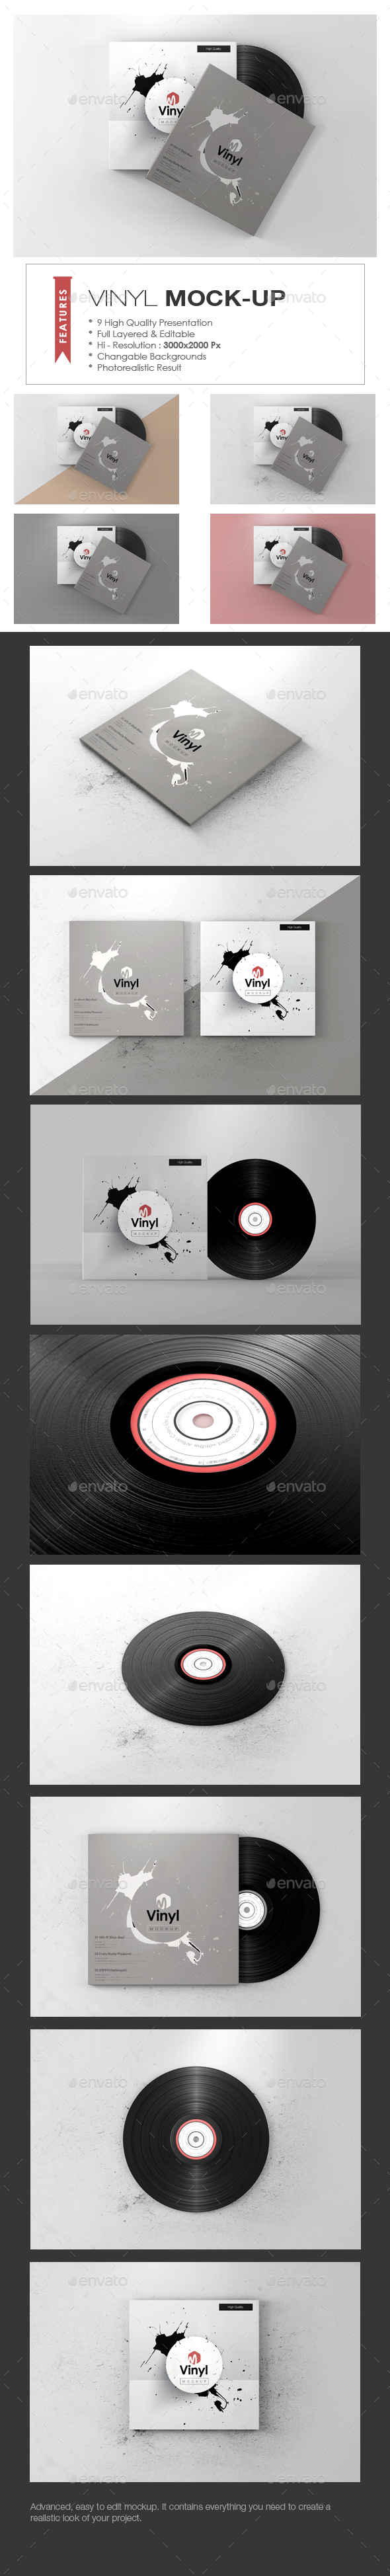 Download Vinyl Mock-up by 89PixeL | GraphicRiver